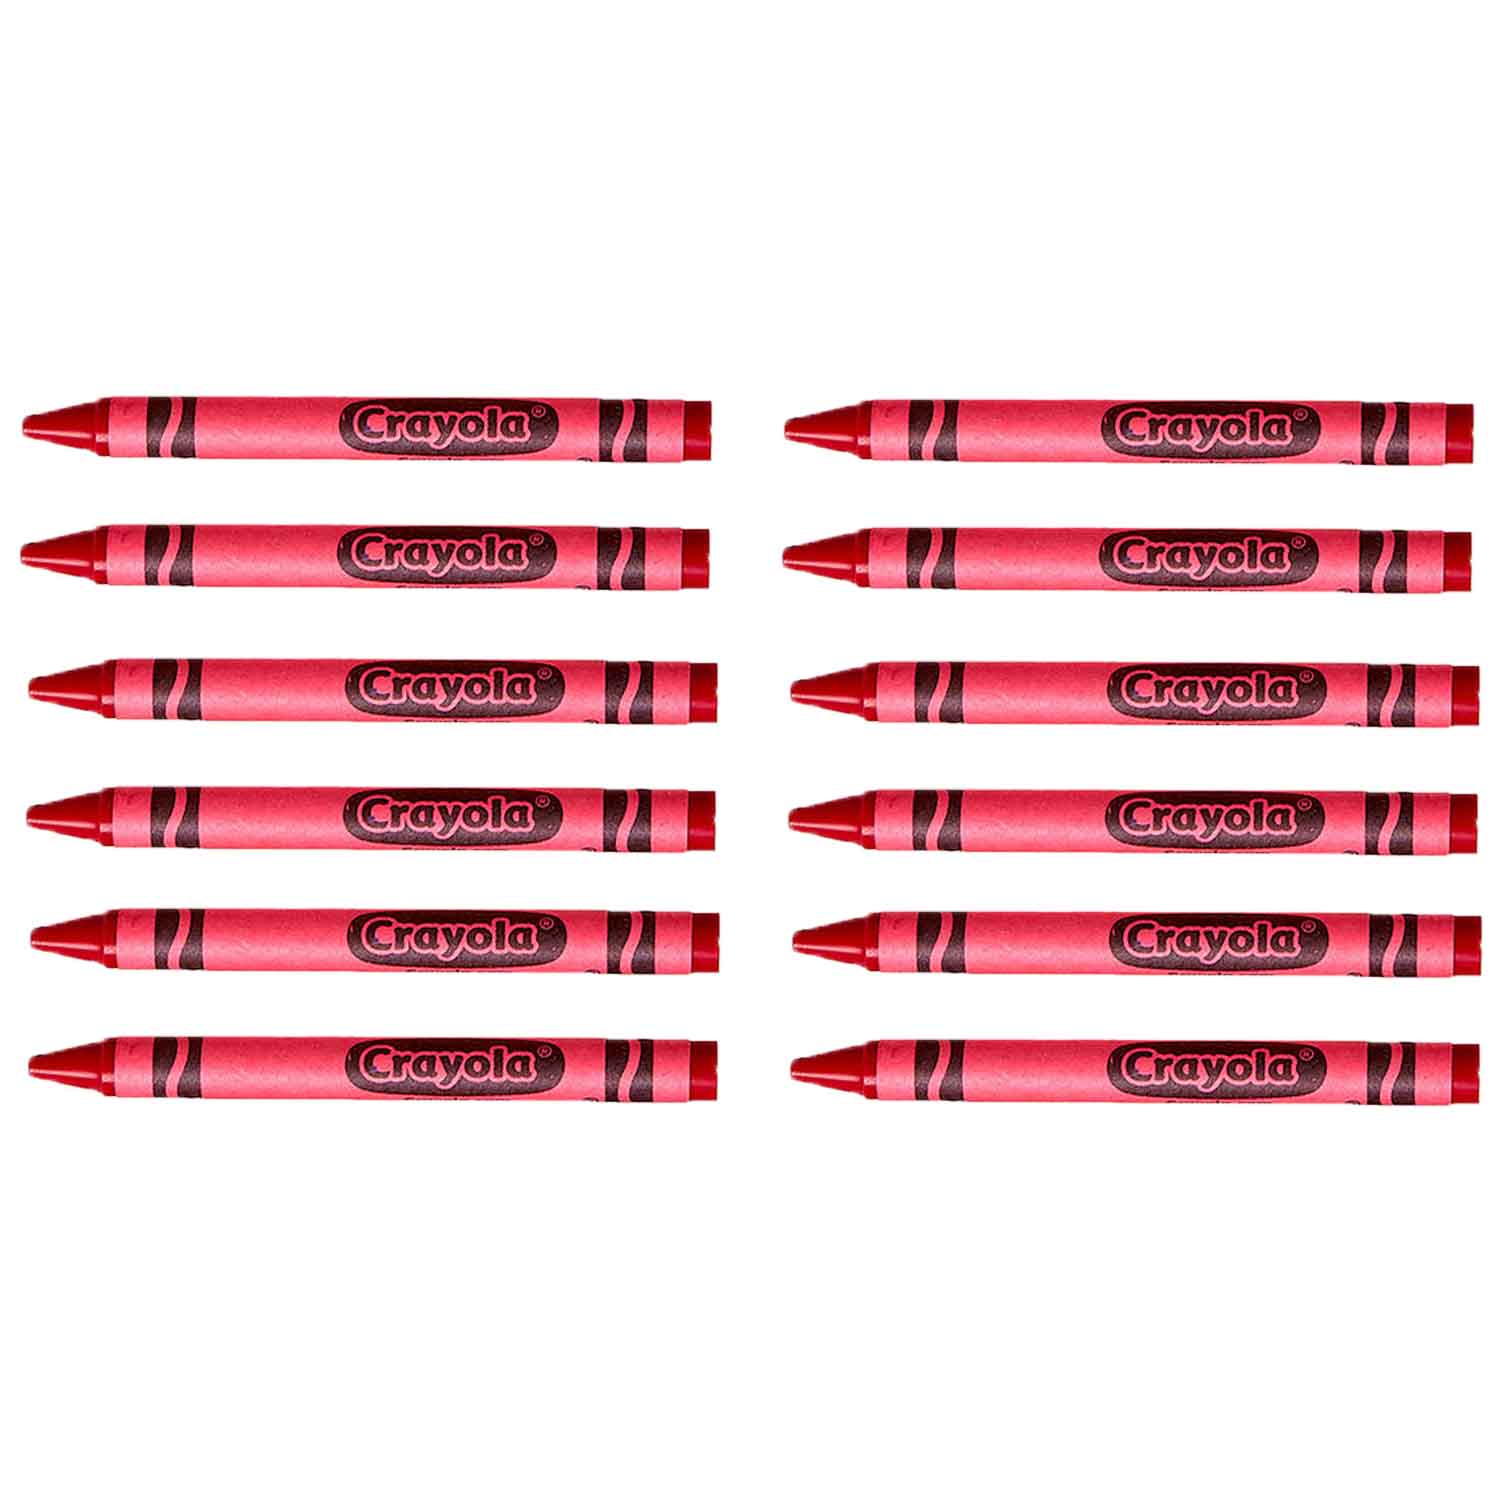 Crayola Crayon Large Refill, Red